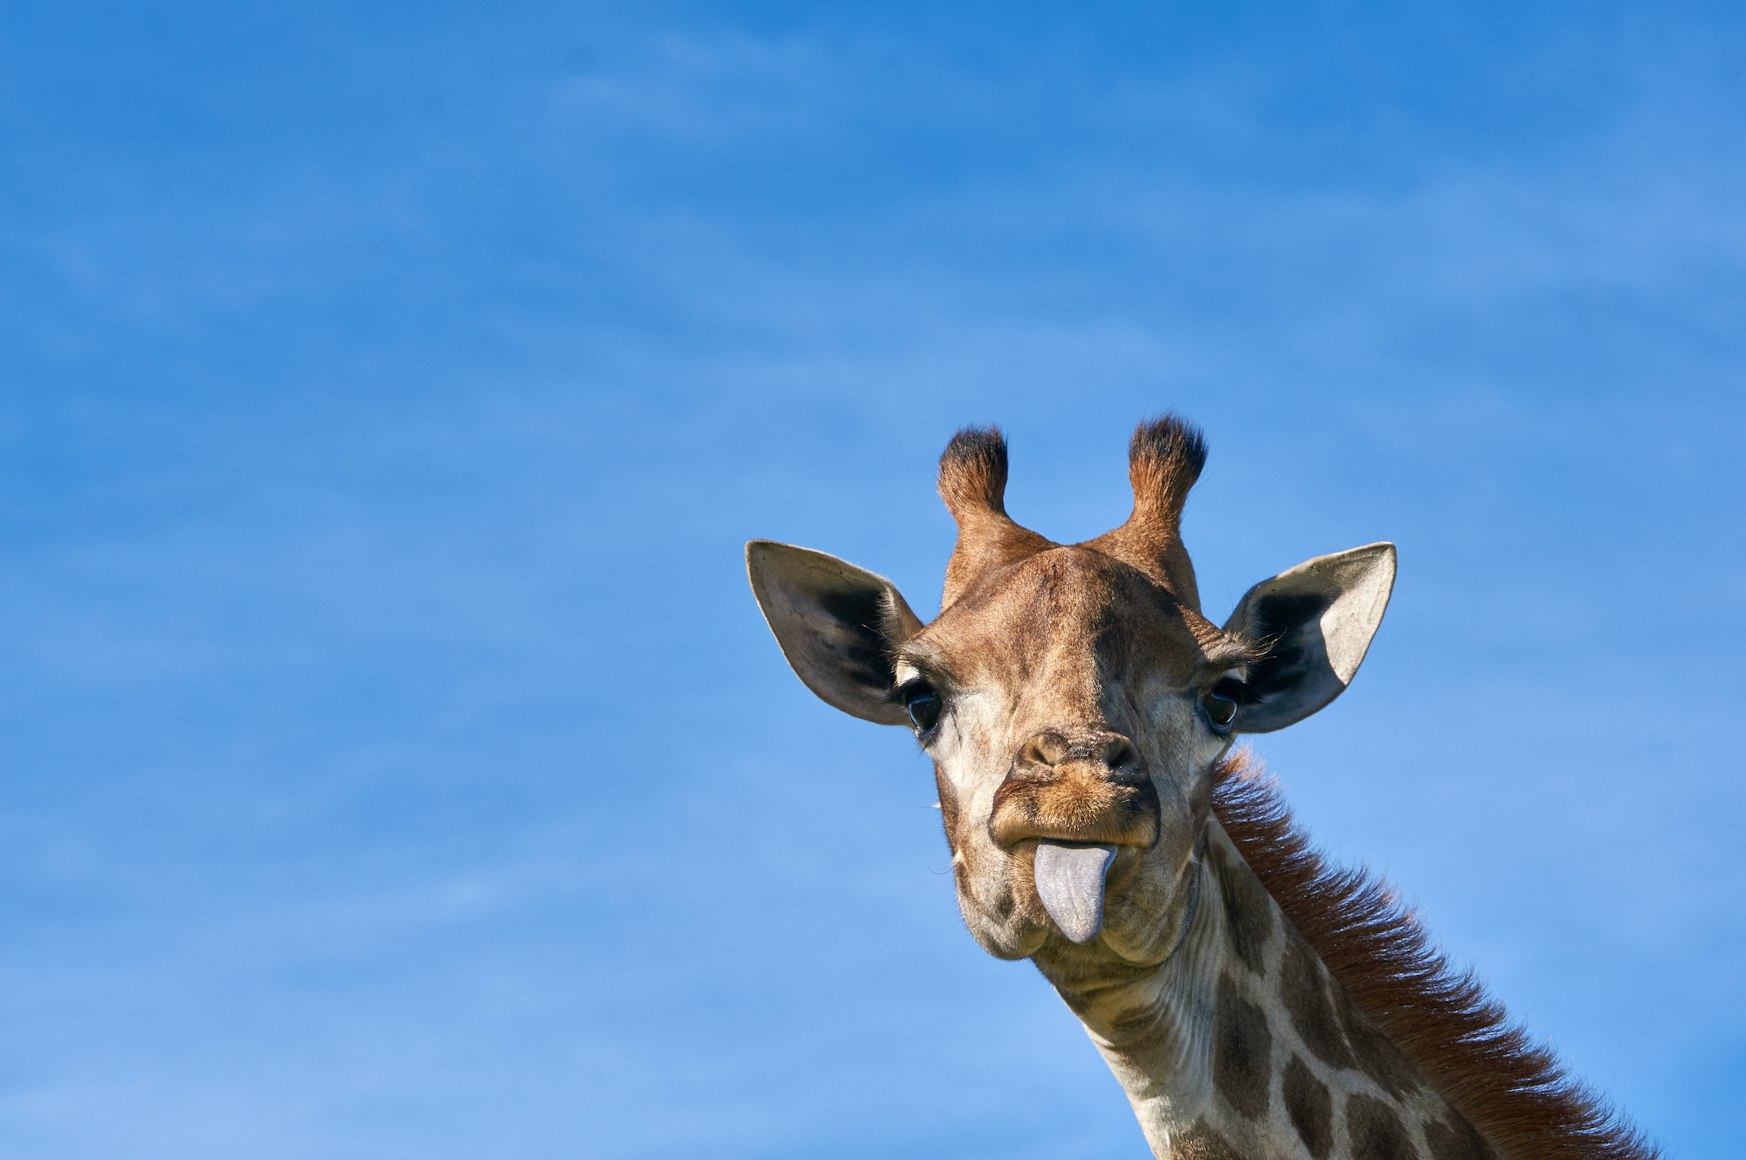 giraffe sticking its tongue out